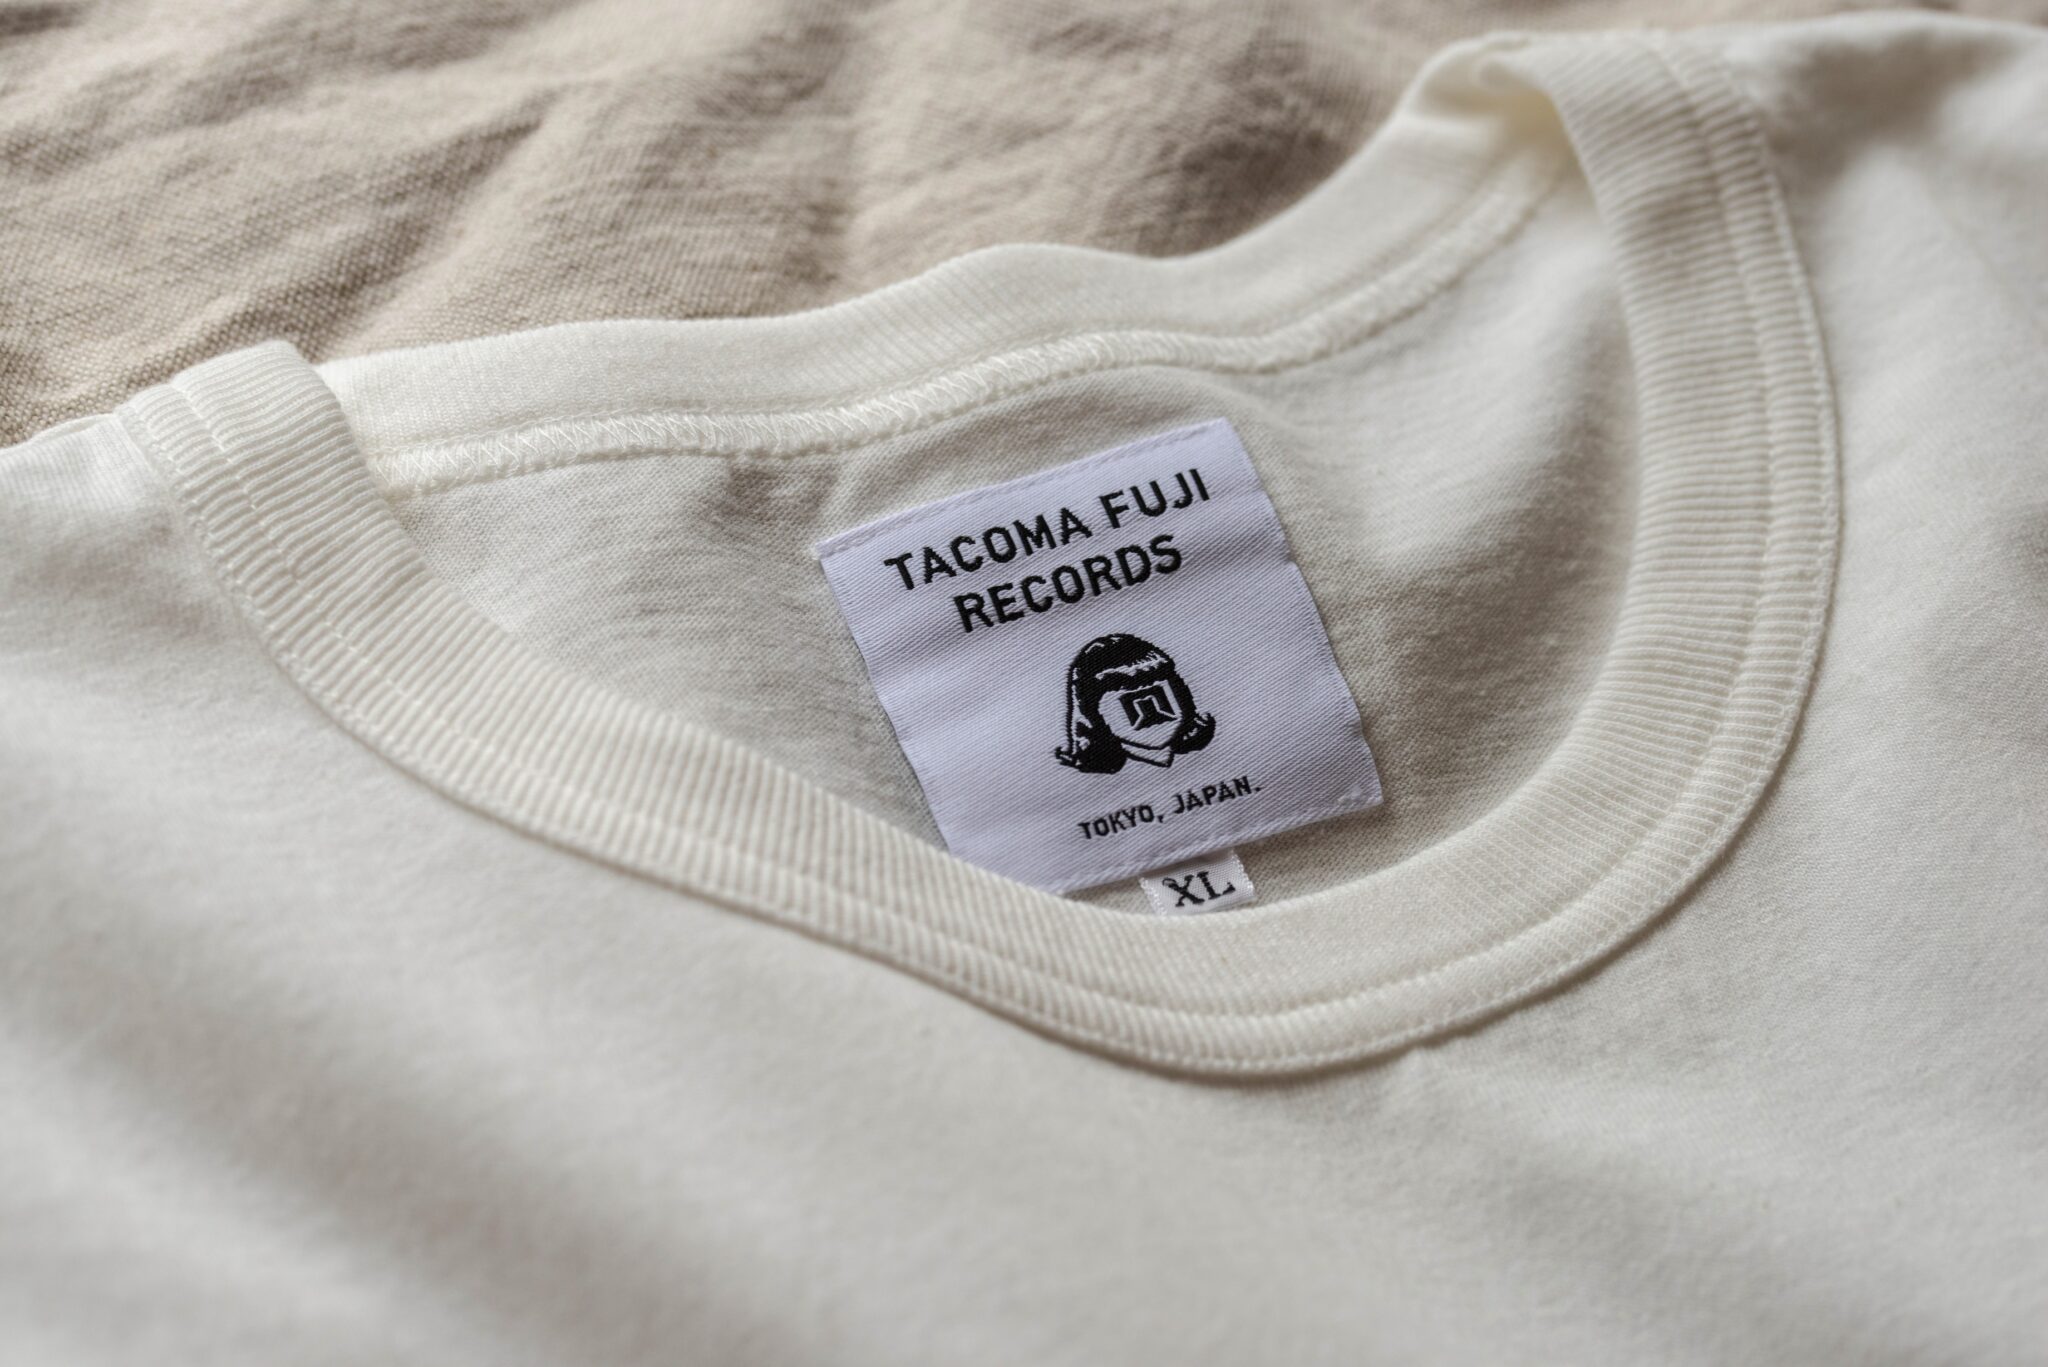 Photo: brand name tag of TACOMA FUJI RECORDS